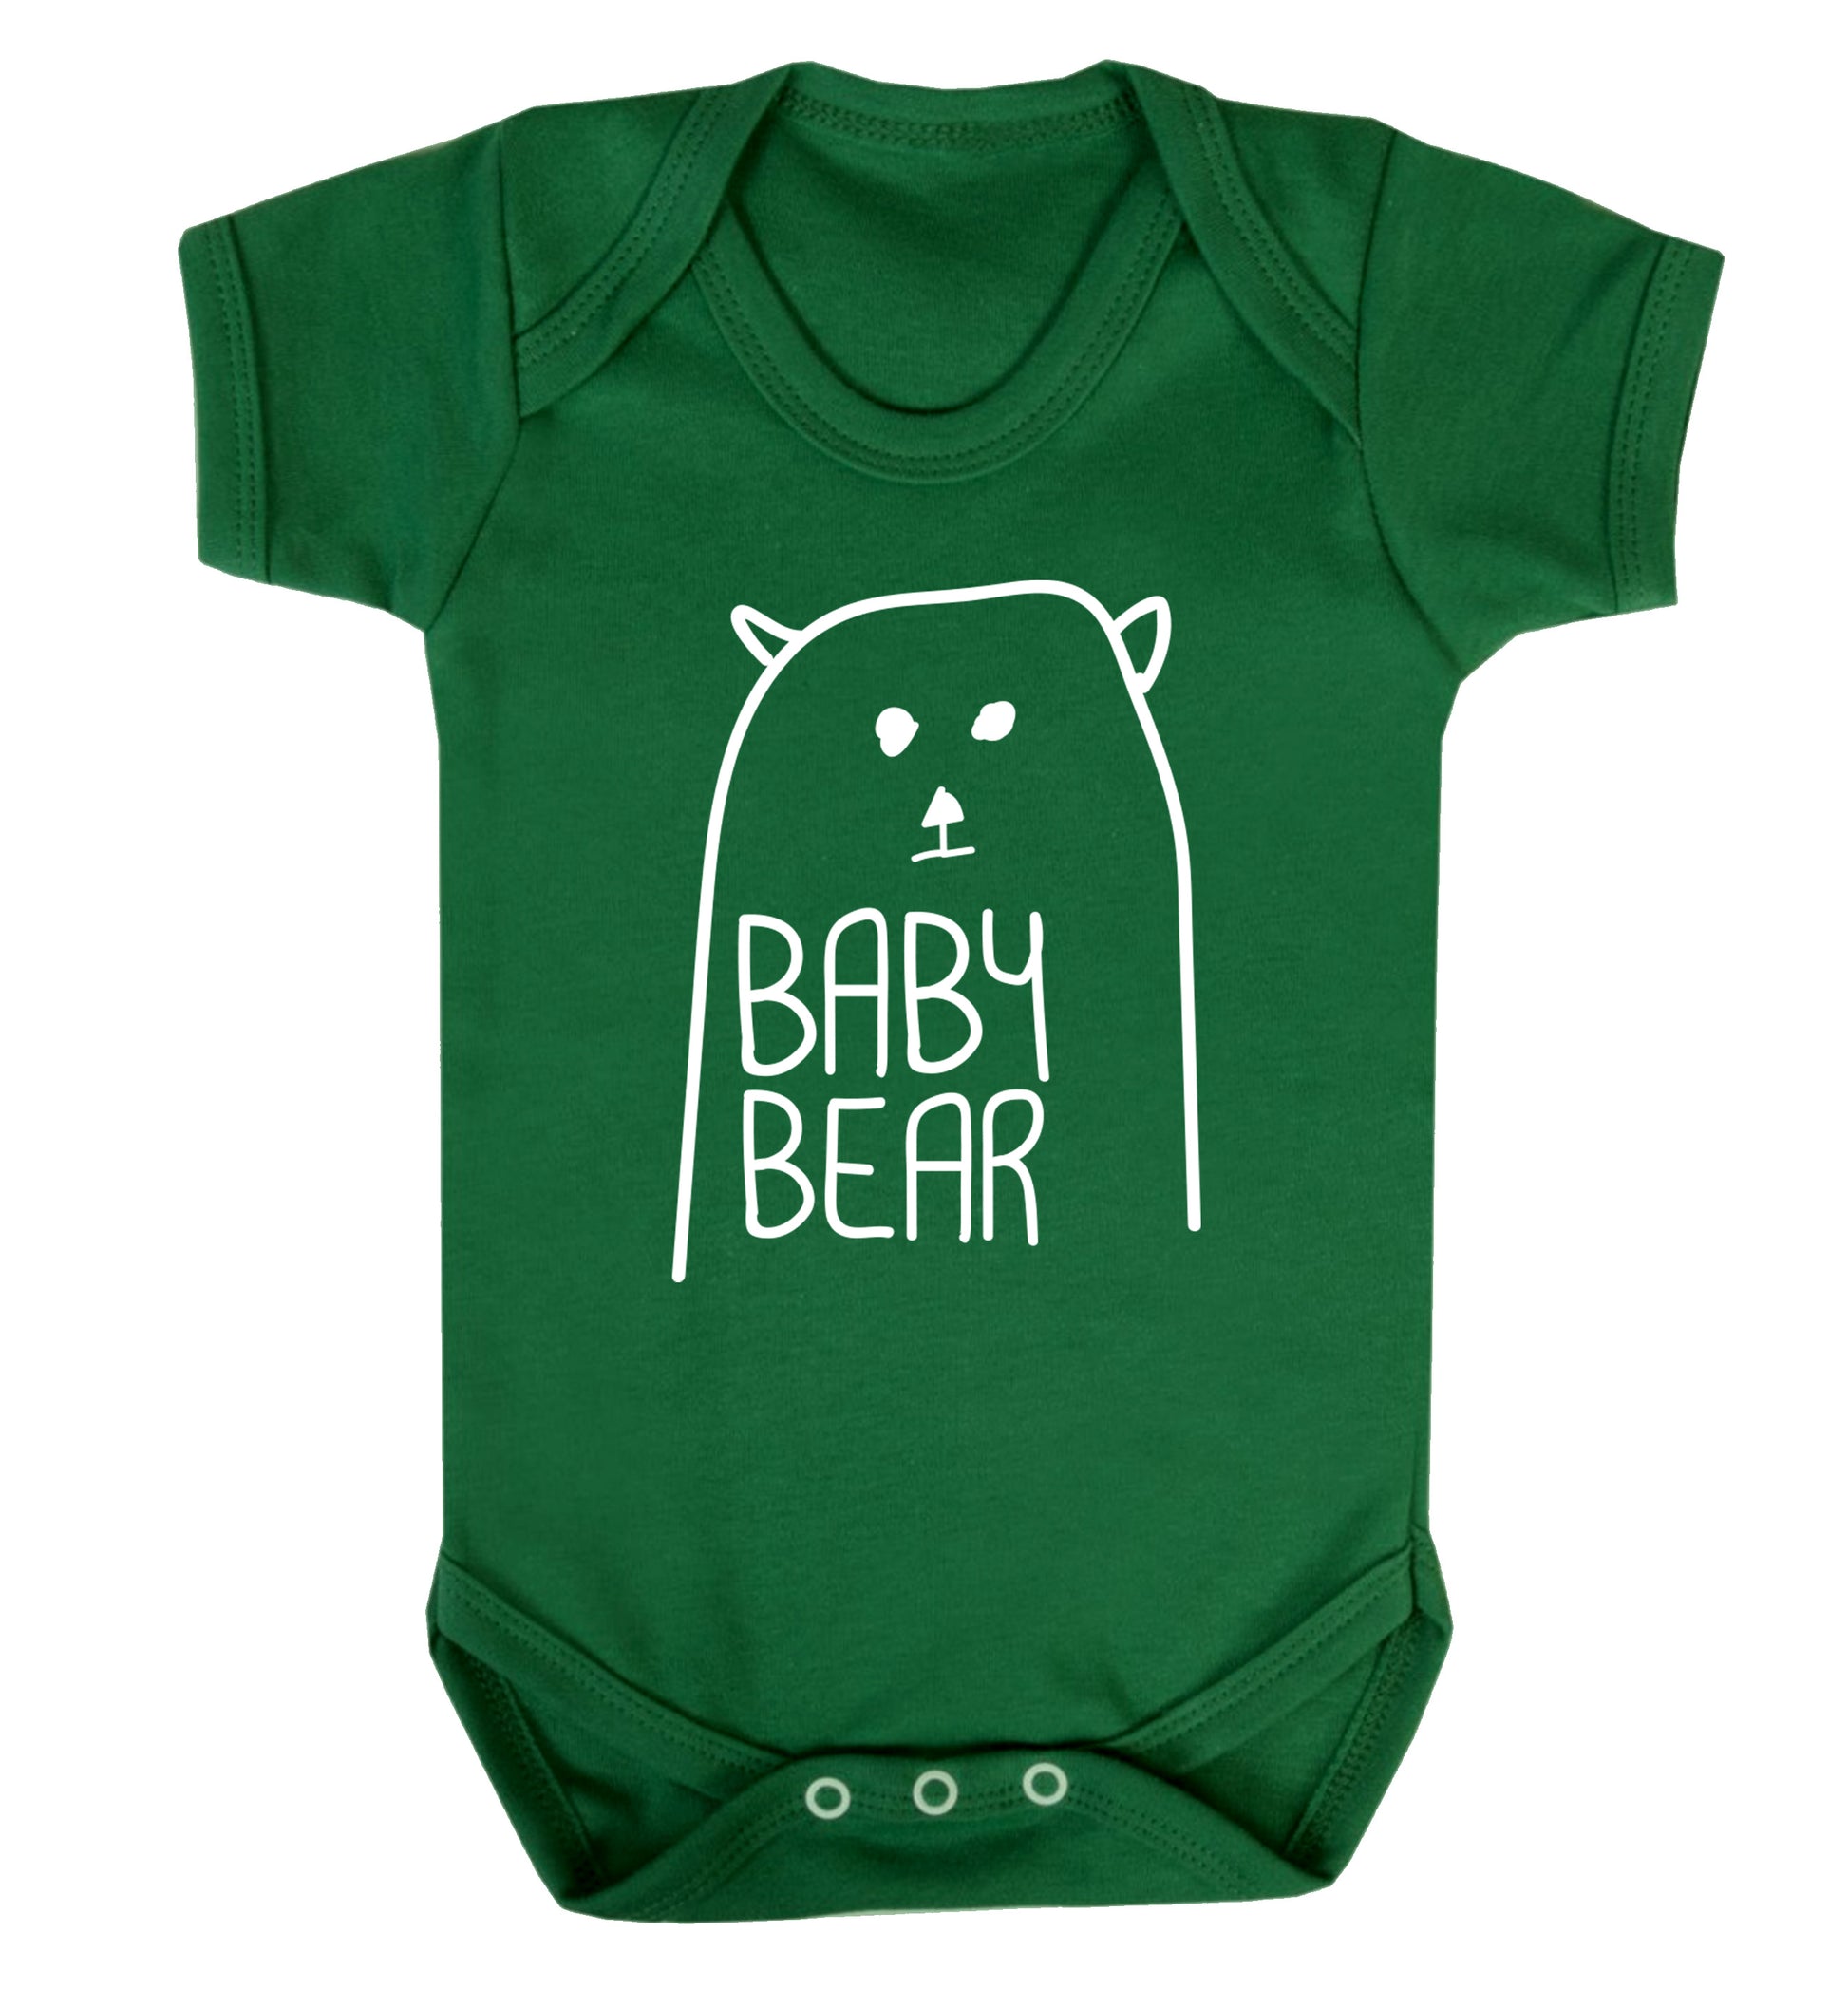 Baby bear Baby Vest green 18-24 months